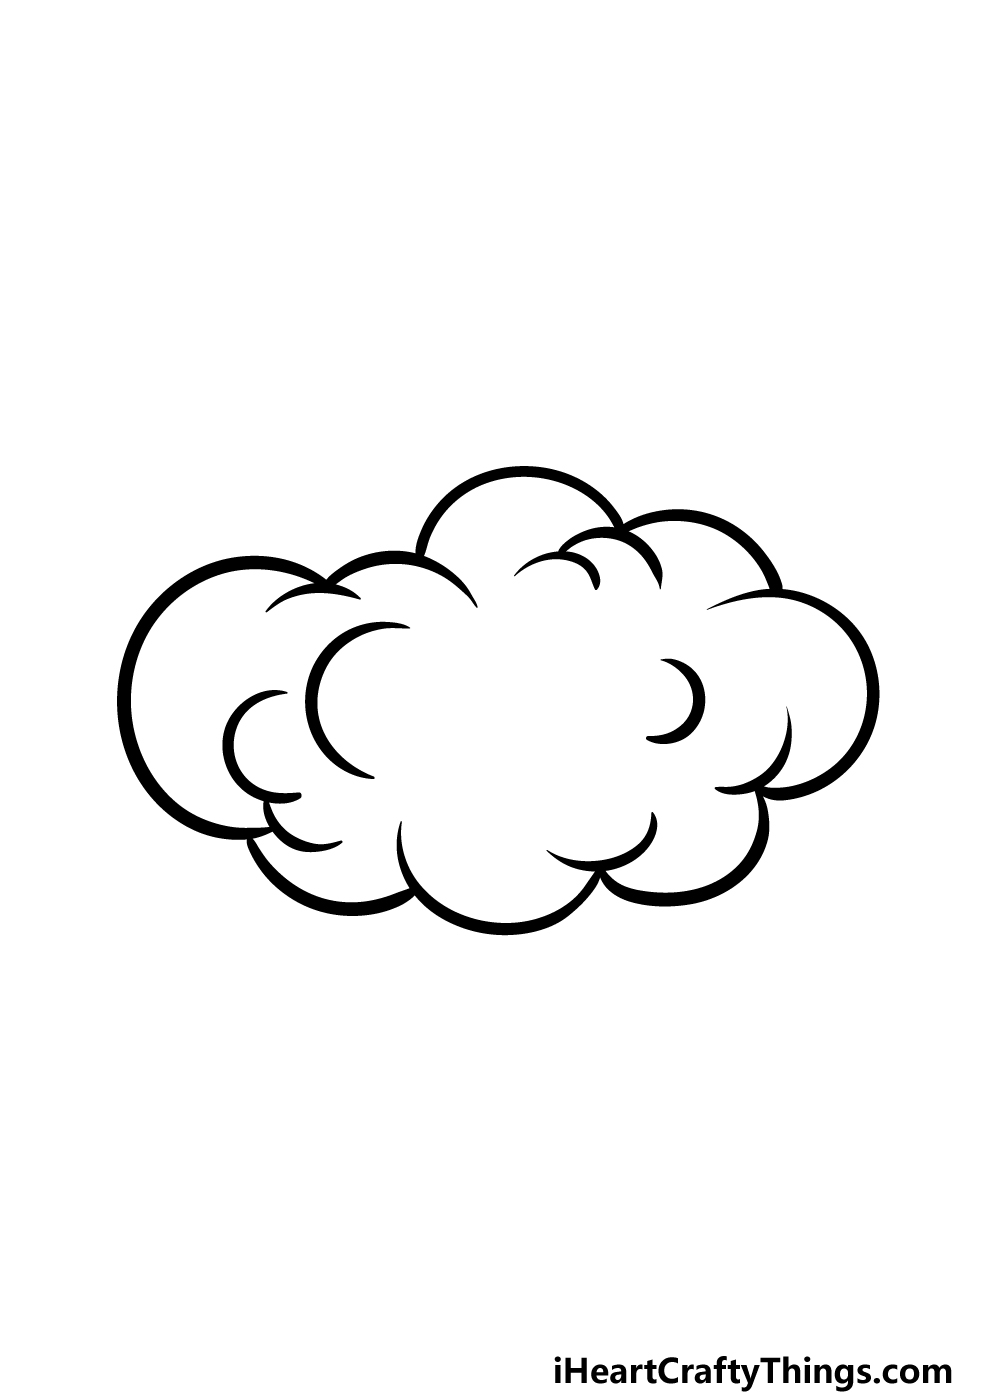 How to Draw A Cartoon cloud step 6